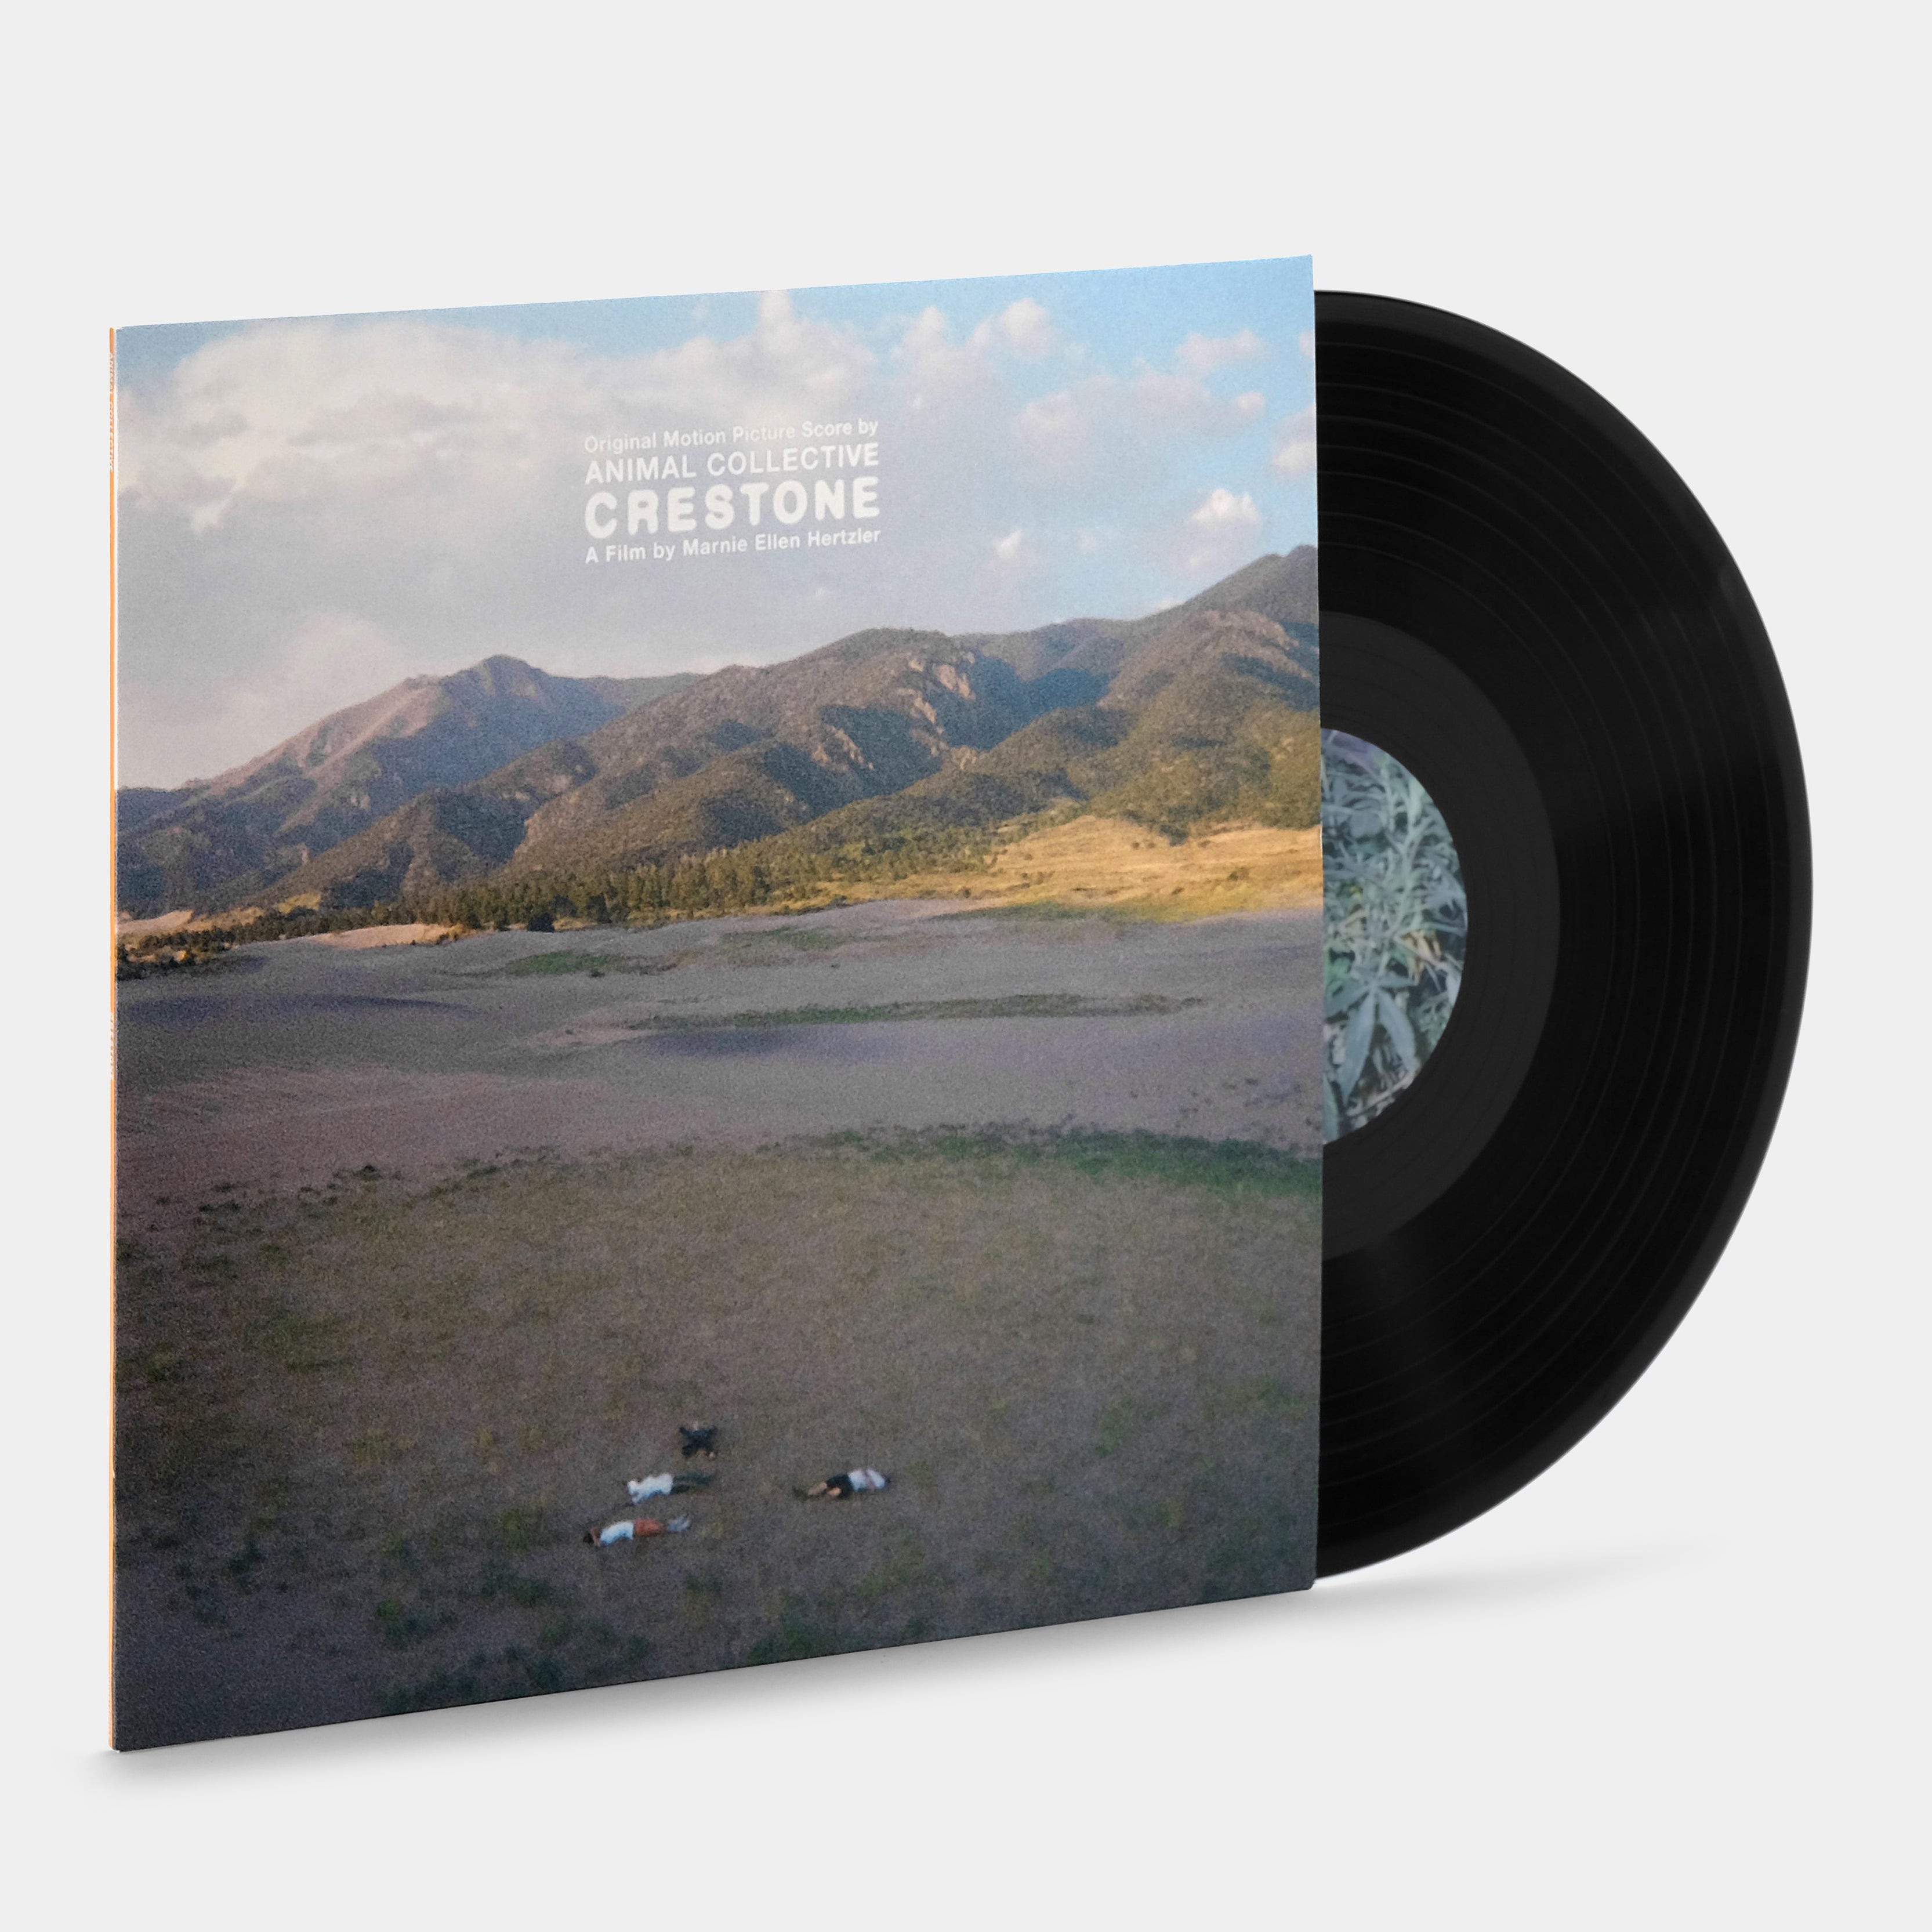 Animal Collective - Crestone LP Vinyl Record